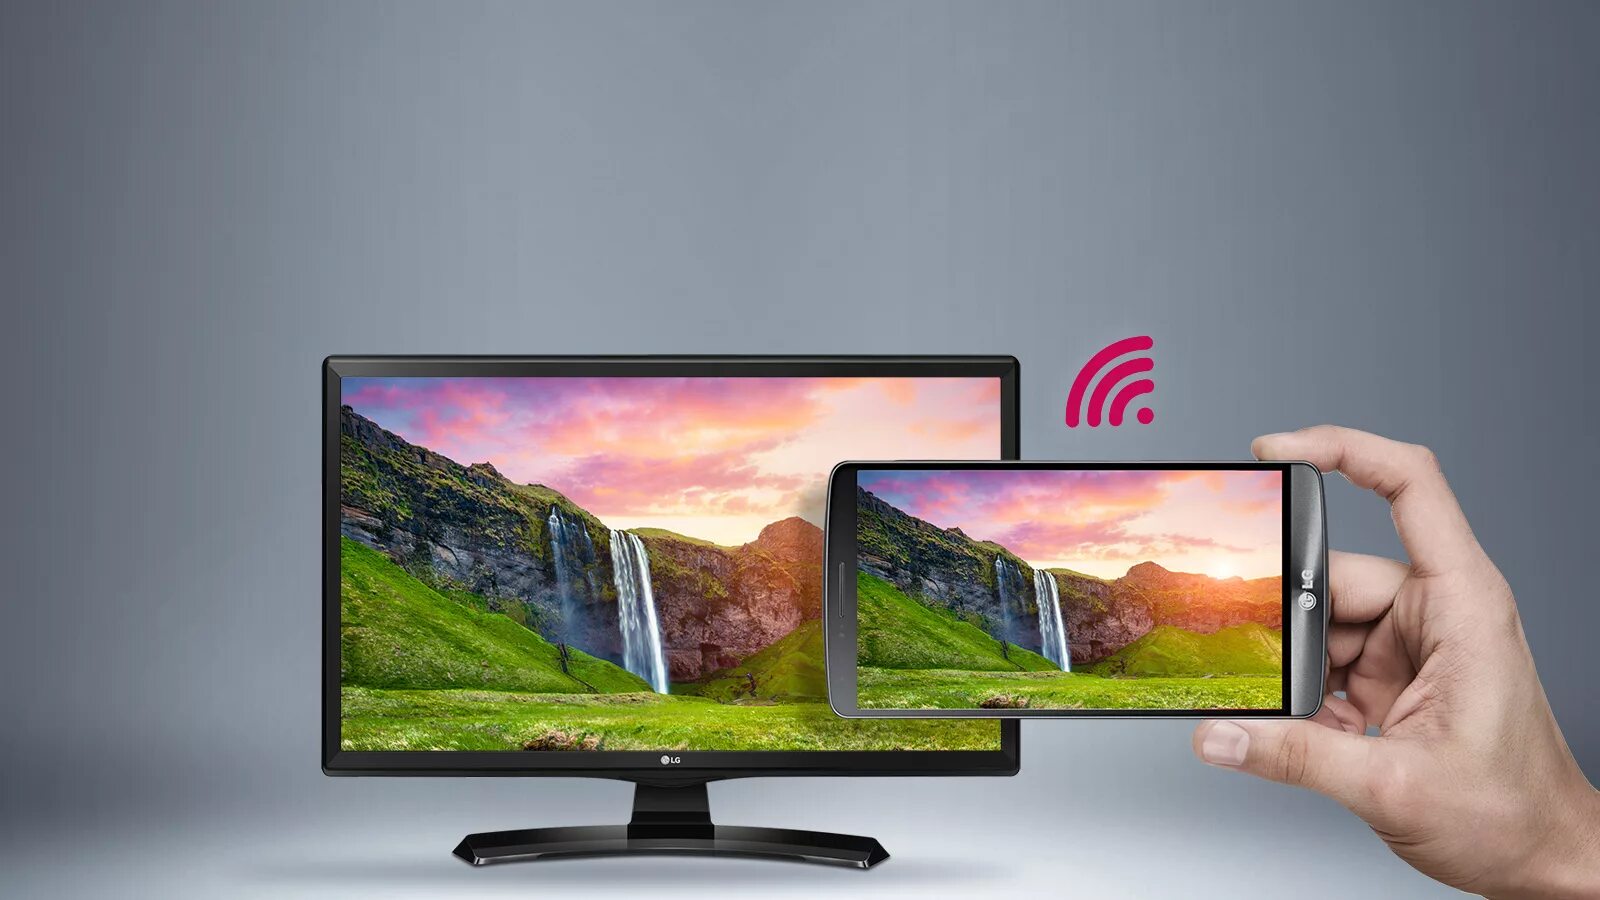 Телевизор LG 28lk480u-PZ. LG 24 Smart TV. Lg28lk480u-PZ. LG 24mt49s-PZ.